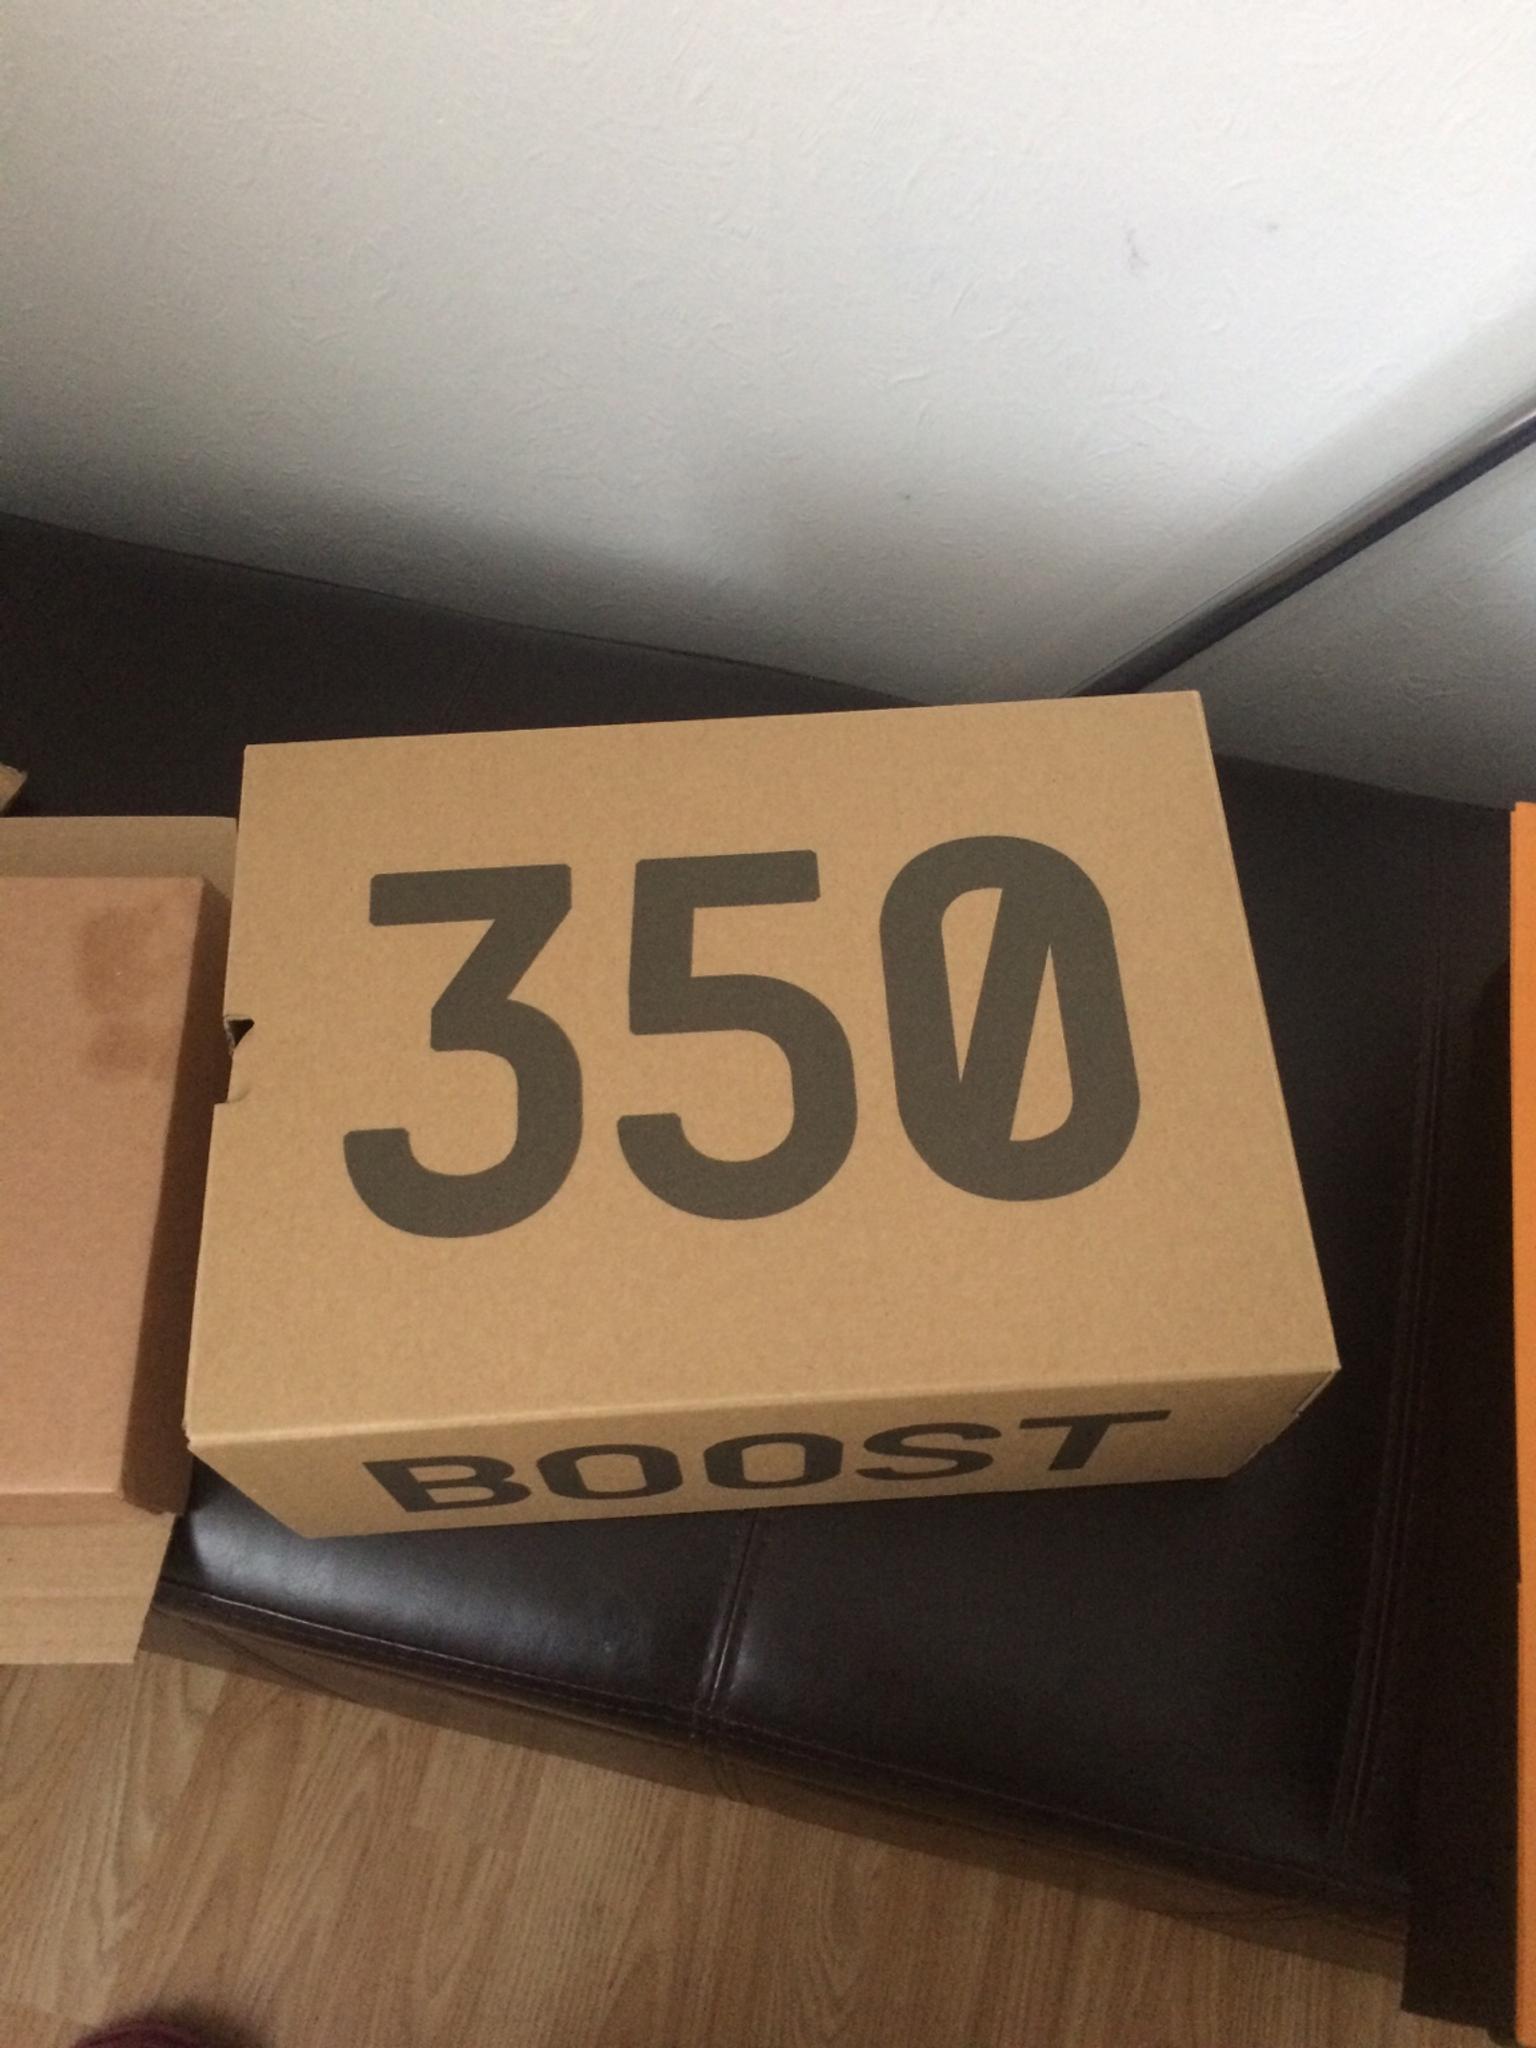 yeezy boost shoe box